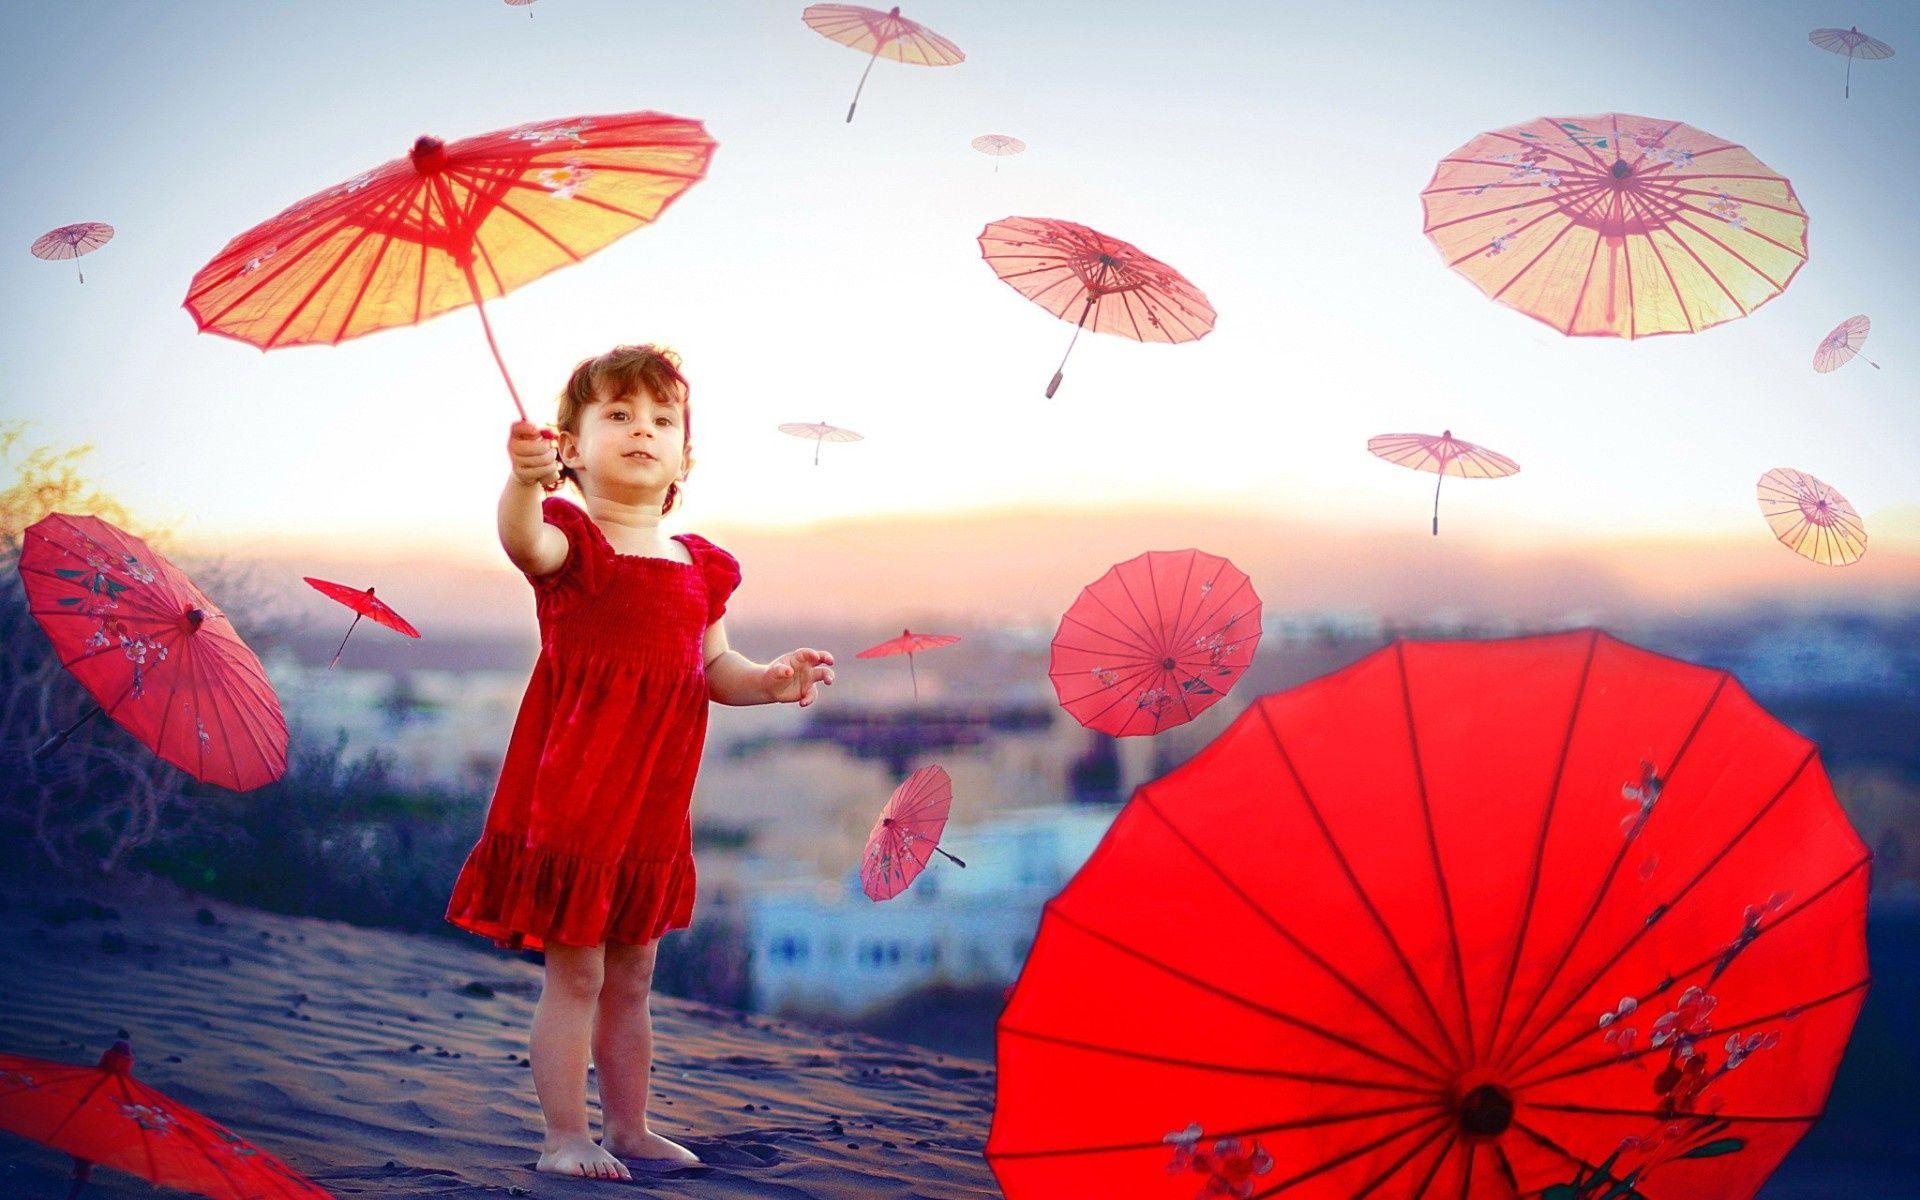 Cute Umbrella Wallpaper HD nS. Awesomeness. Cute umbrellas